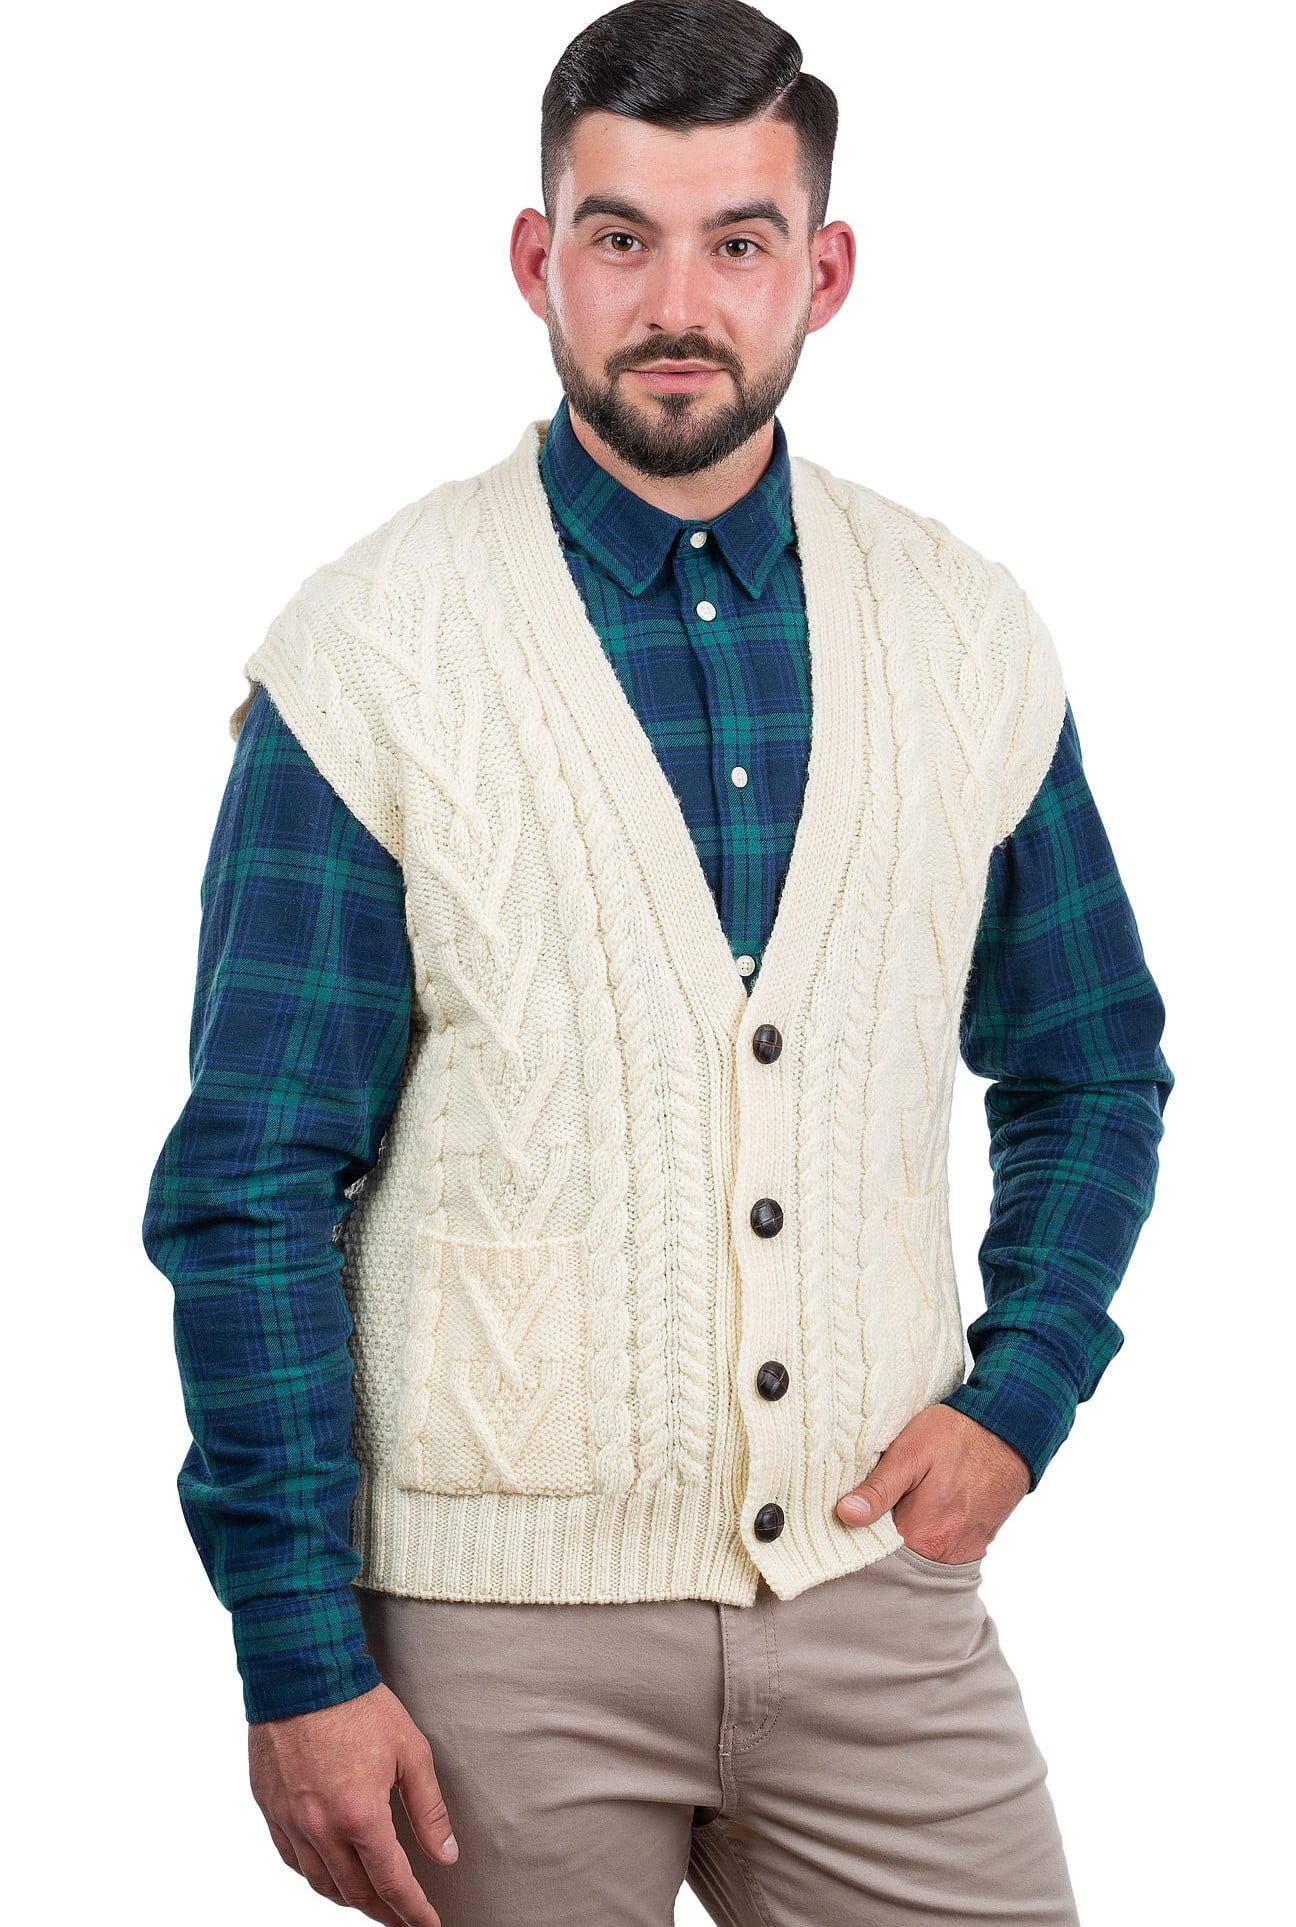 Verslaving lont Huidige SAOL Men's 100% Merino Wool Sweater Vest Aran Irish V-Neck Cable Knit  Sleeveless Cardigan with Buttons and Pockets - Walmart.com